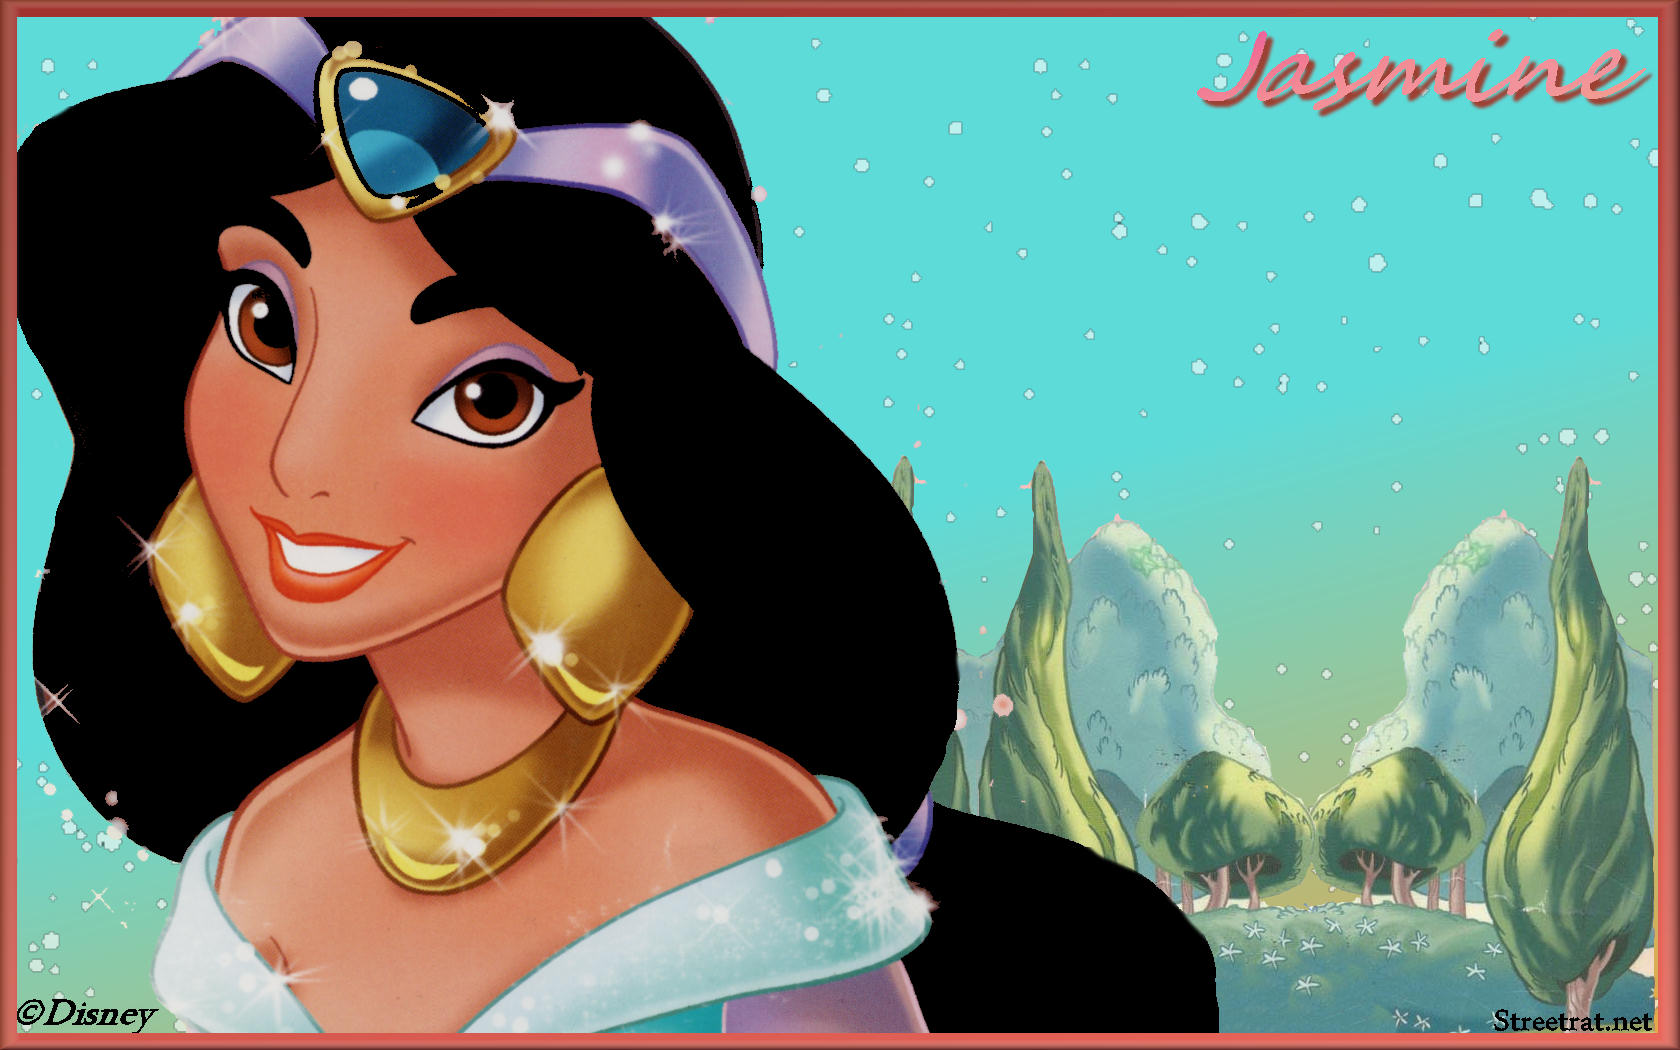 Disney Princess Jasmine Wallpaper Wallpapersafari HD Wallpapers Download Free Images Wallpaper [wallpaper981.blogspot.com]